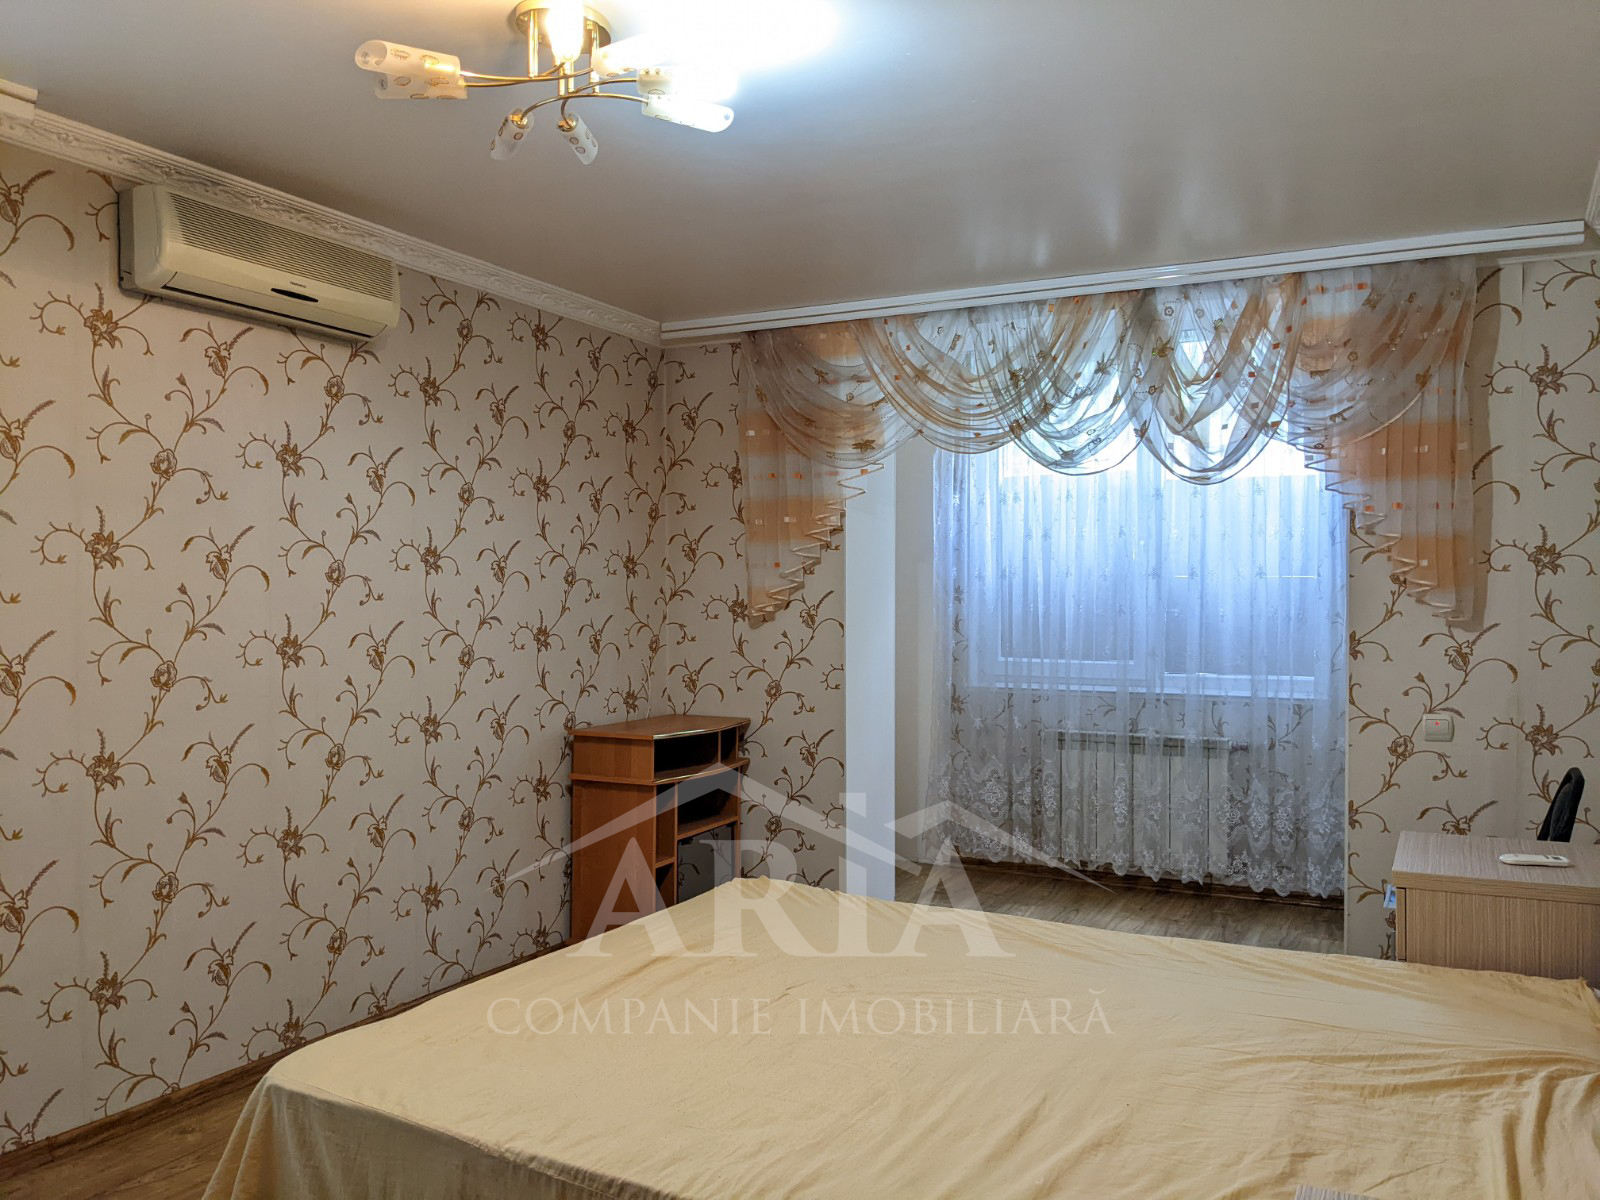 VÂNDUT Apartament de vânzare, Chișinău, sec. Poșta Veche, 1 odaie, euro reparat, 40m2, et.1